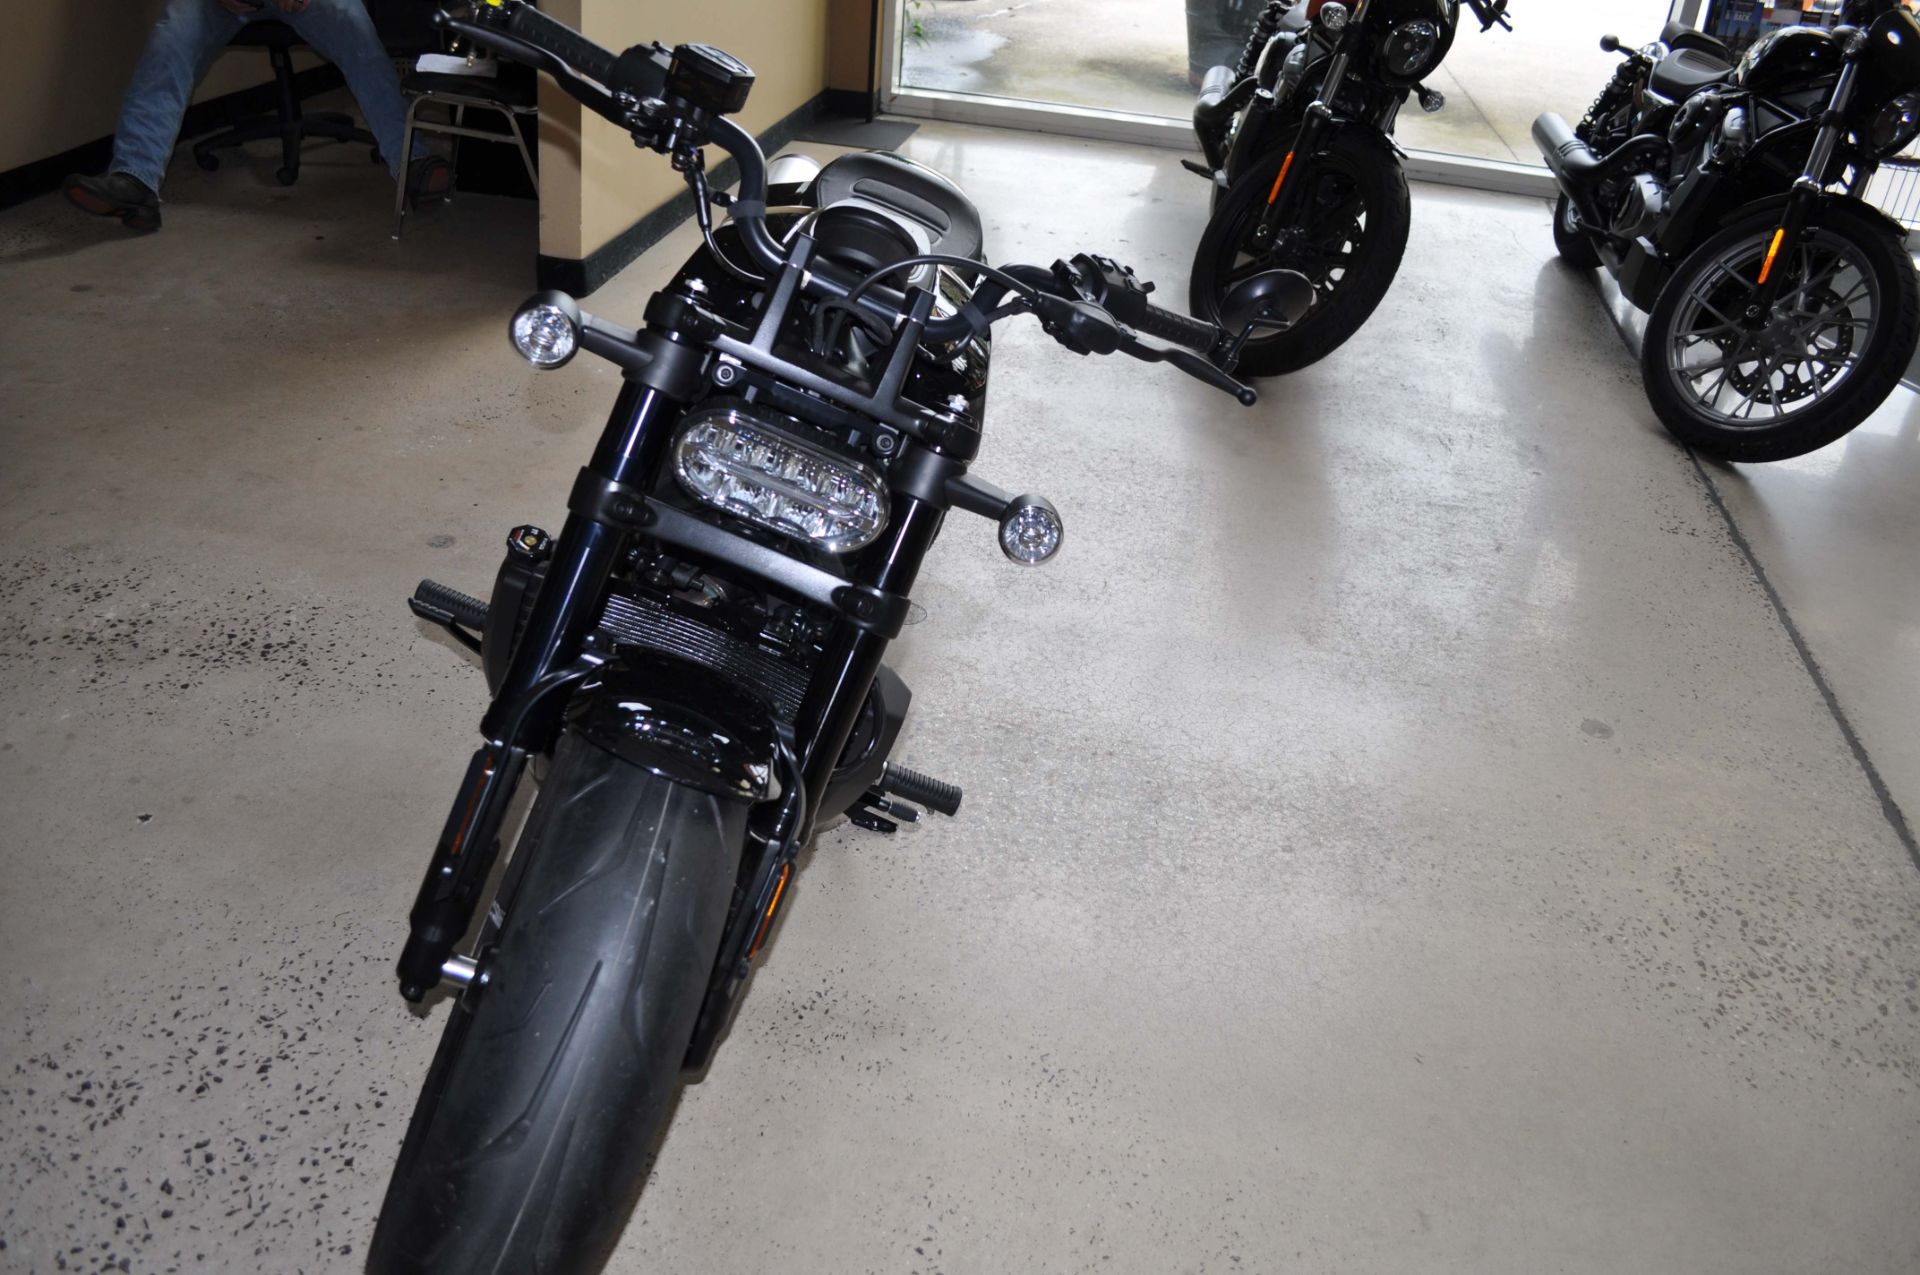 2023 Harley-Davidson Sportster® S in Winston Salem, North Carolina - Photo 6